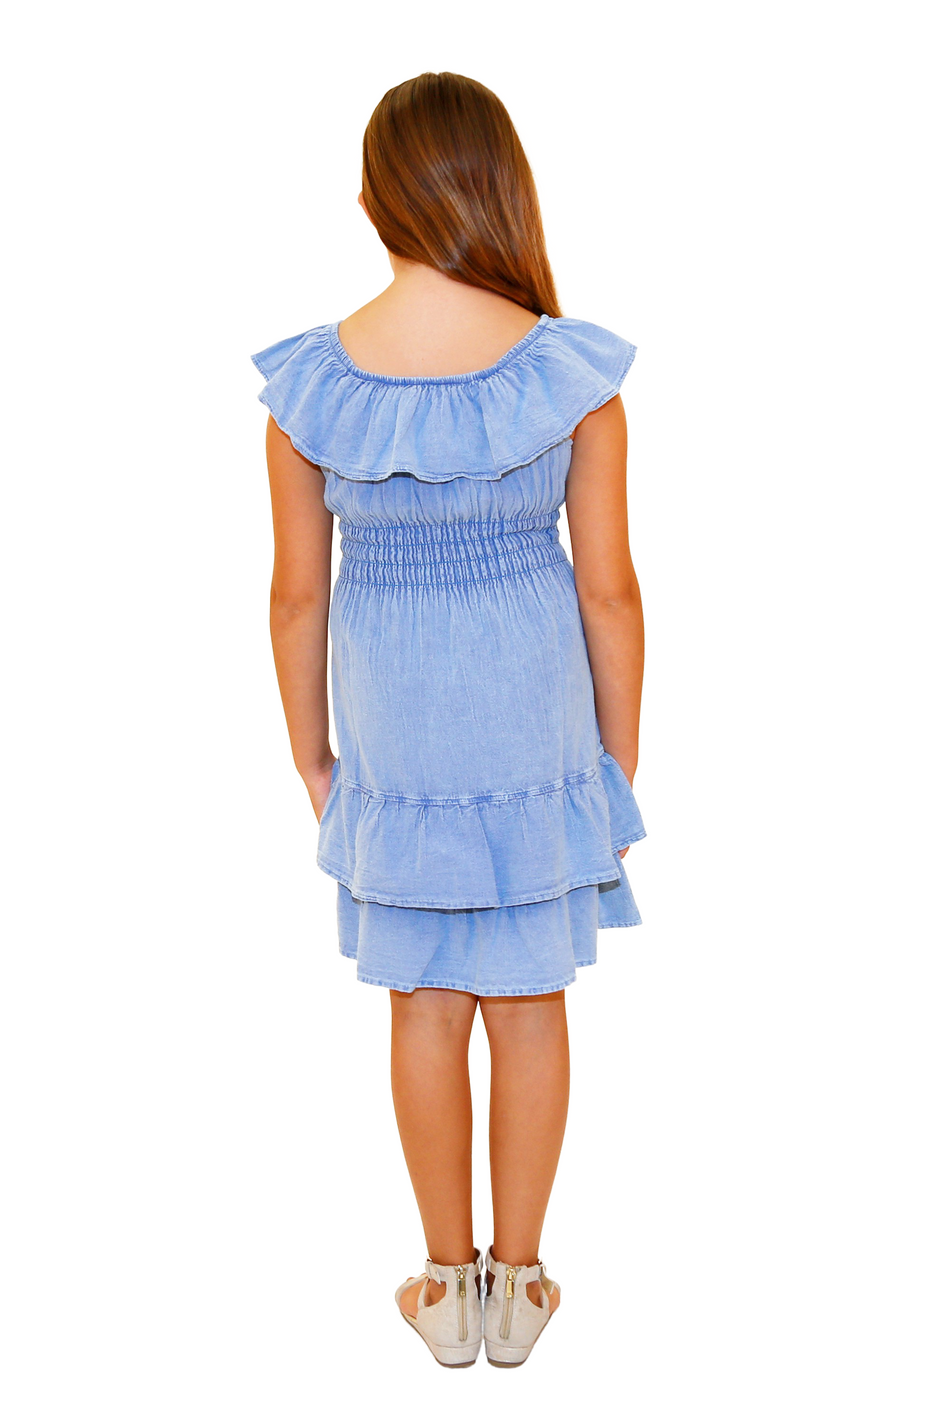 G1005 - Blue Cotton Dress